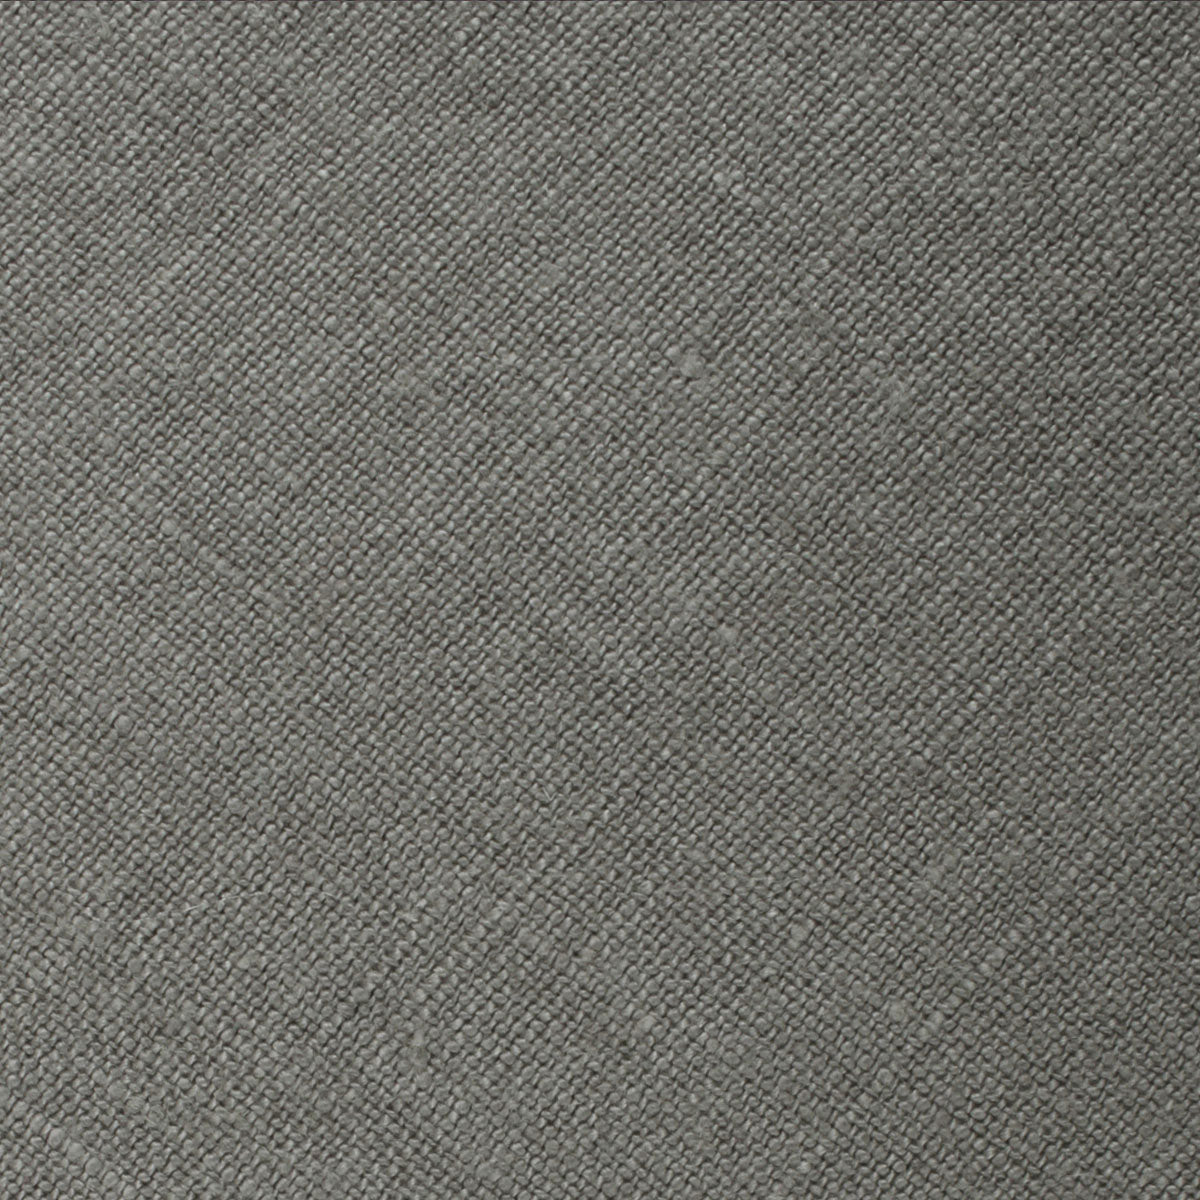 Mercury Charcoal Linen Fabric Swatch